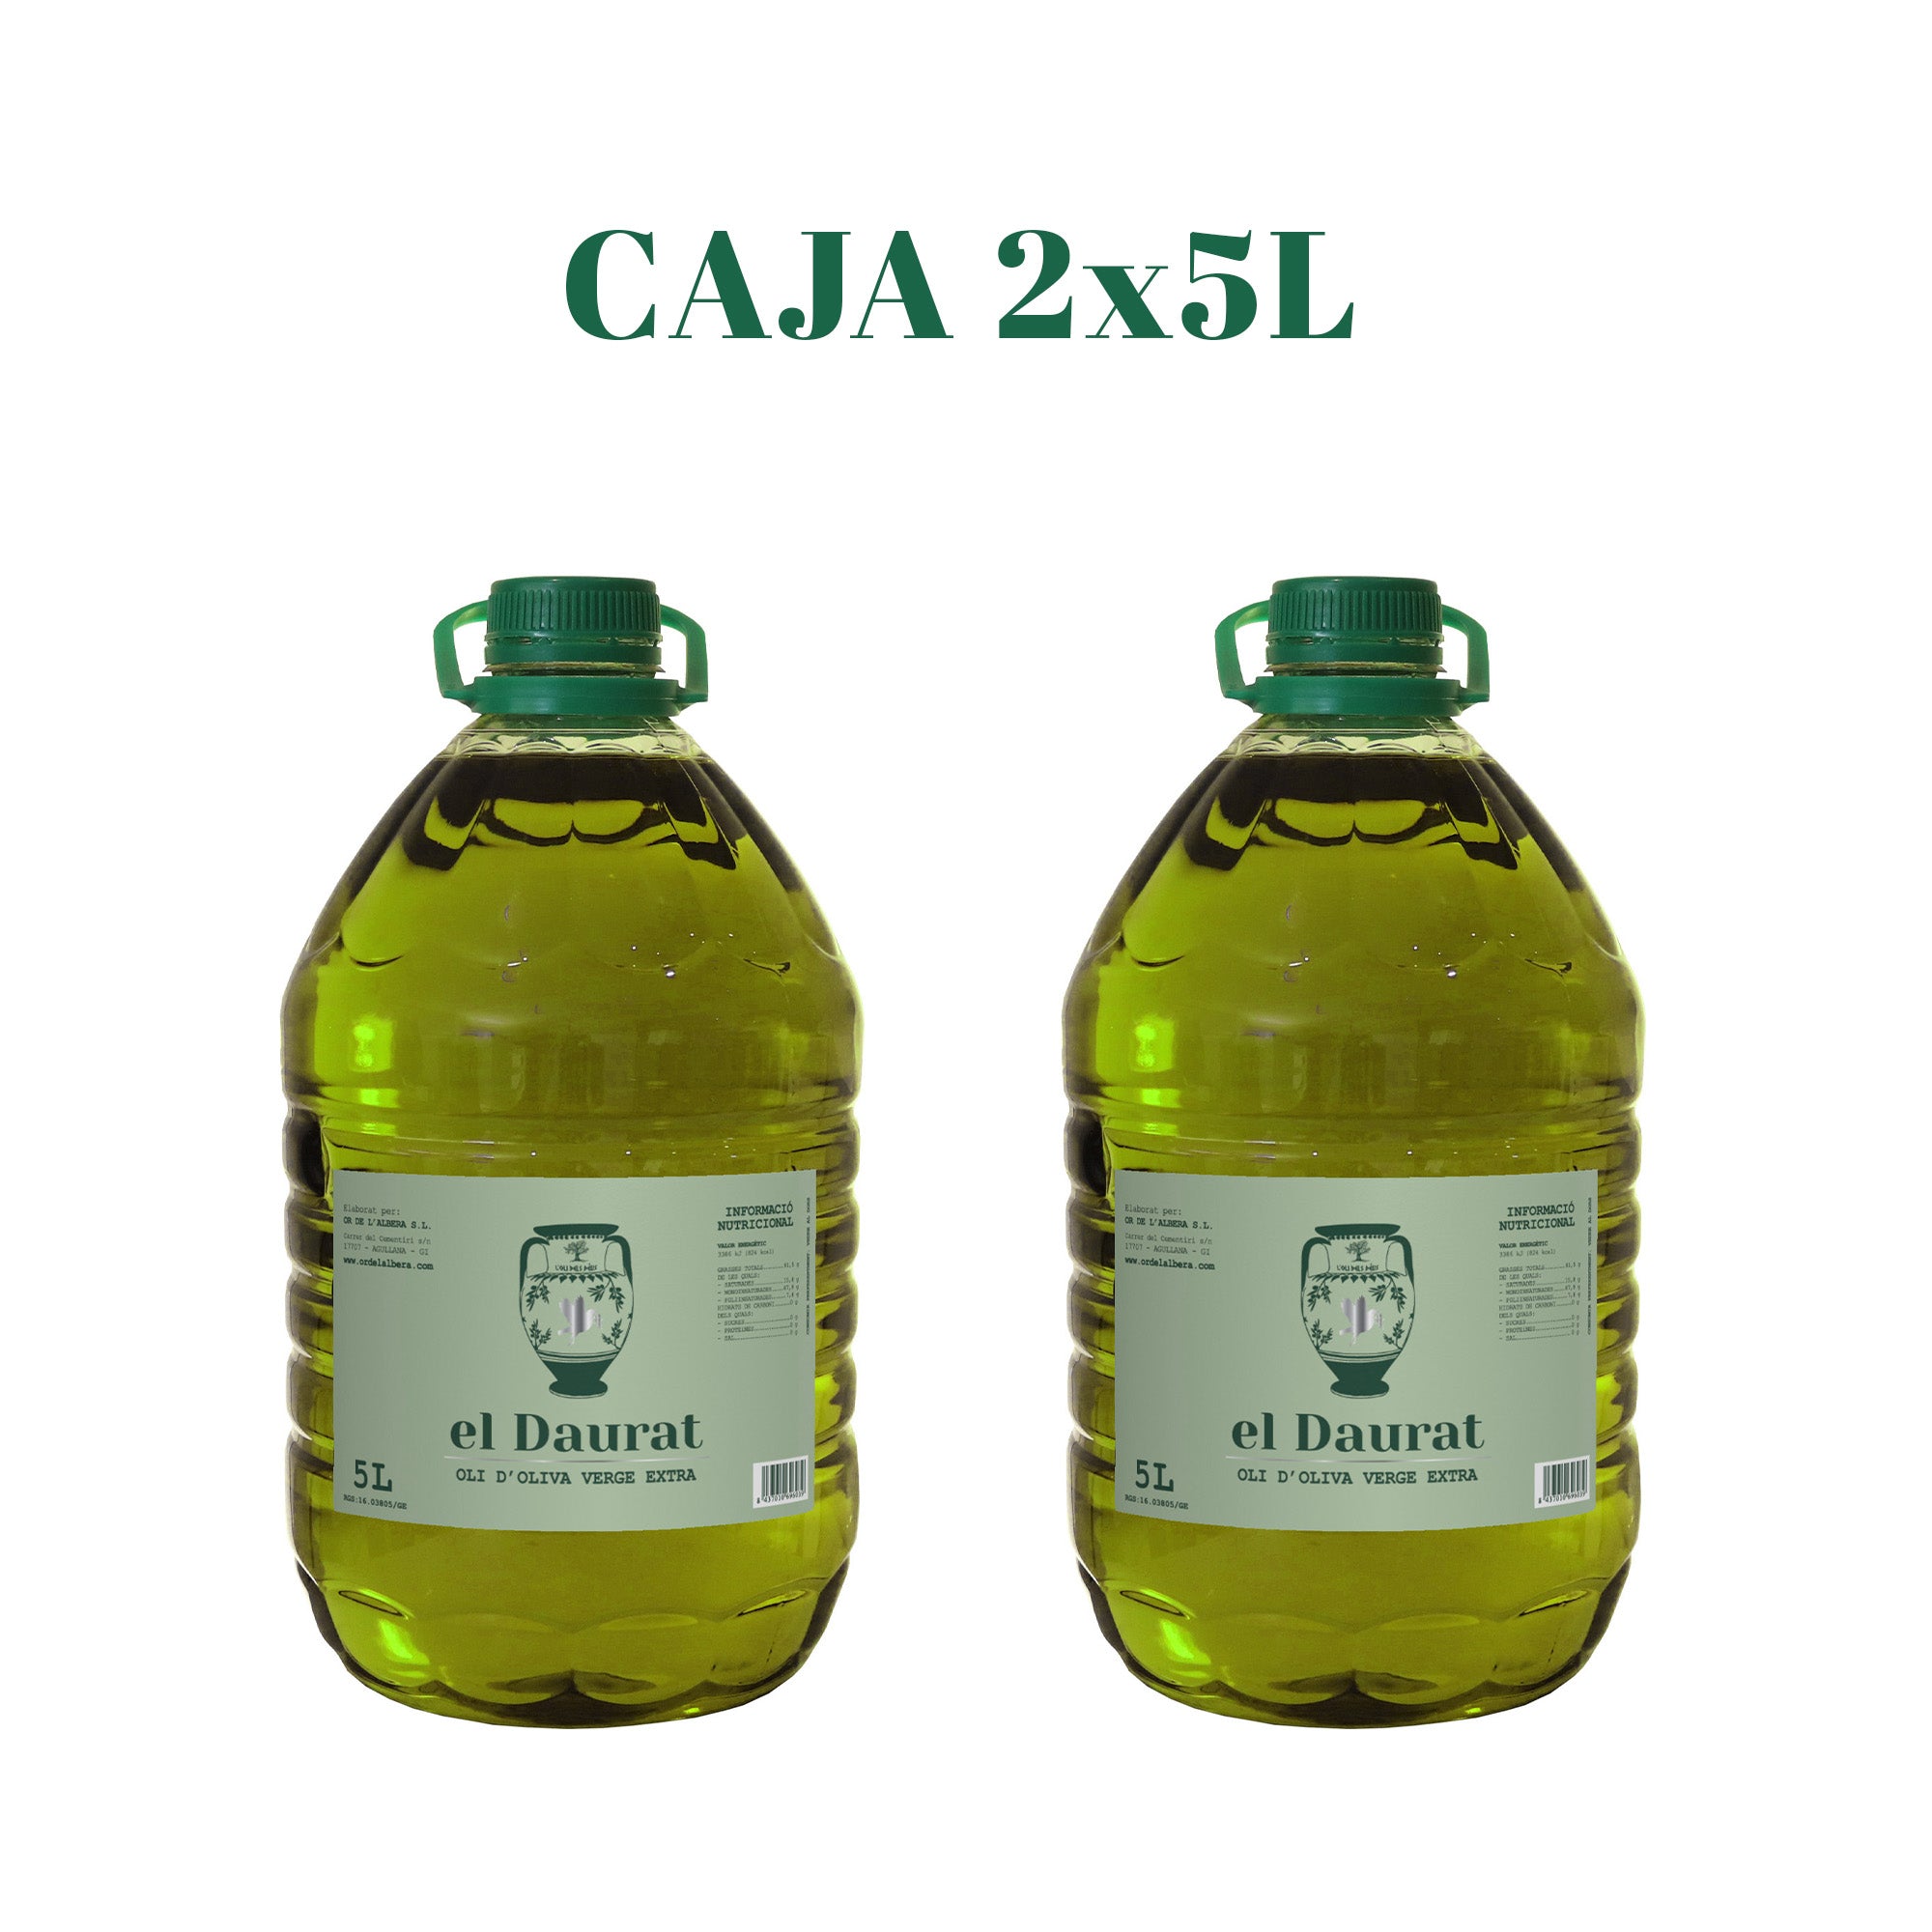 El Daurat 5L - Aceite de Oliva Virgen Extra Premium de la Costa Brava en Garrafa de 5 Litros